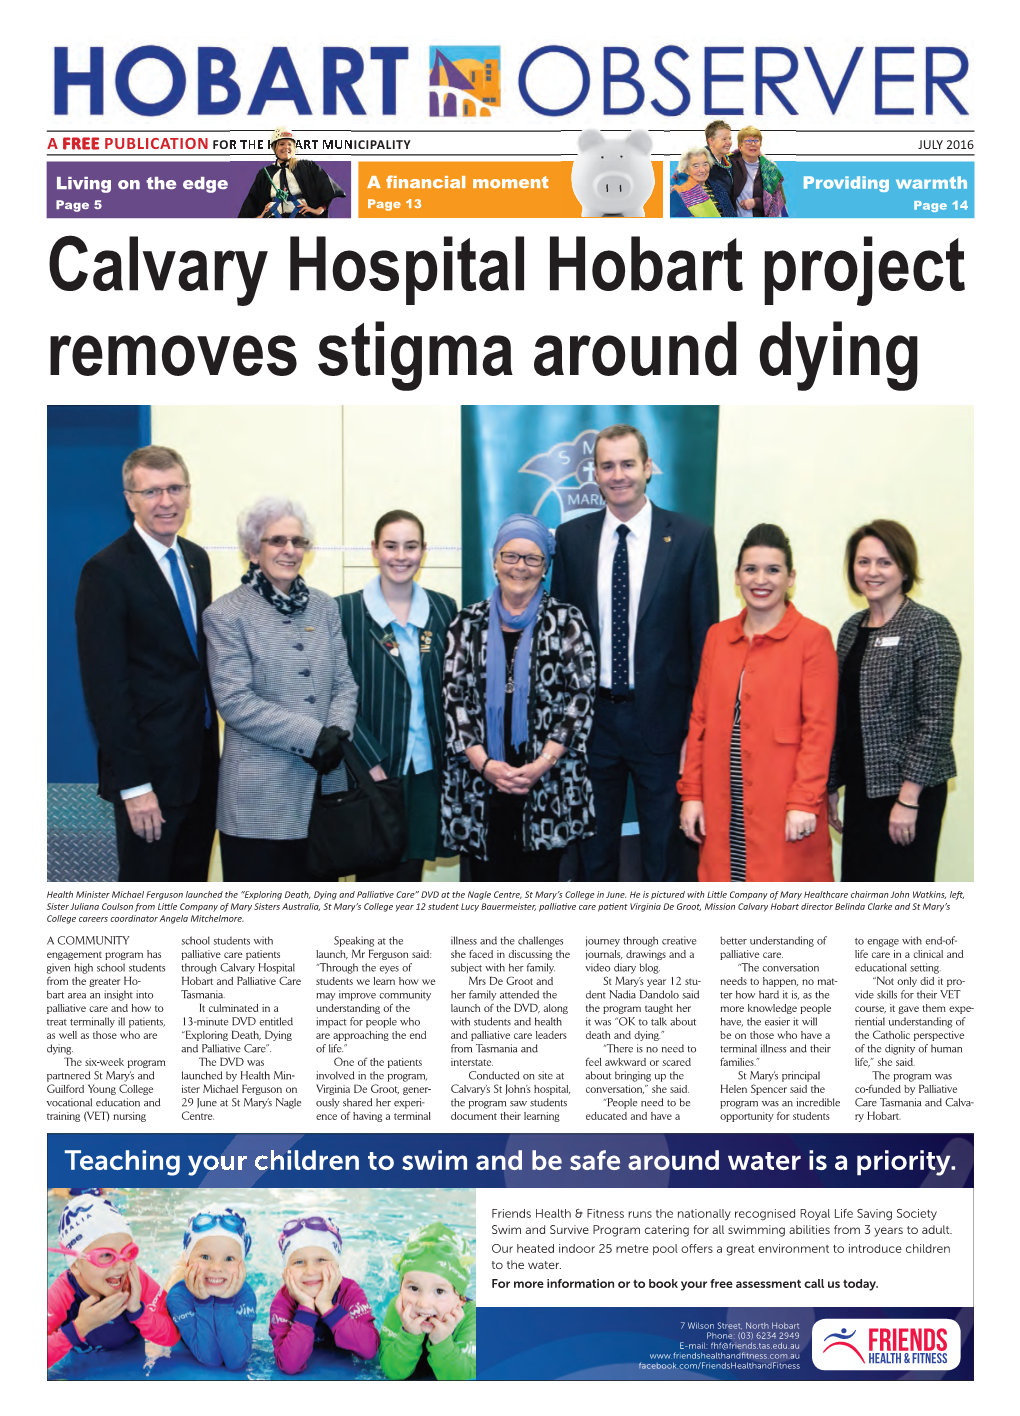 Calvary Hospital Hobart Project Removes Stigma Around Dying